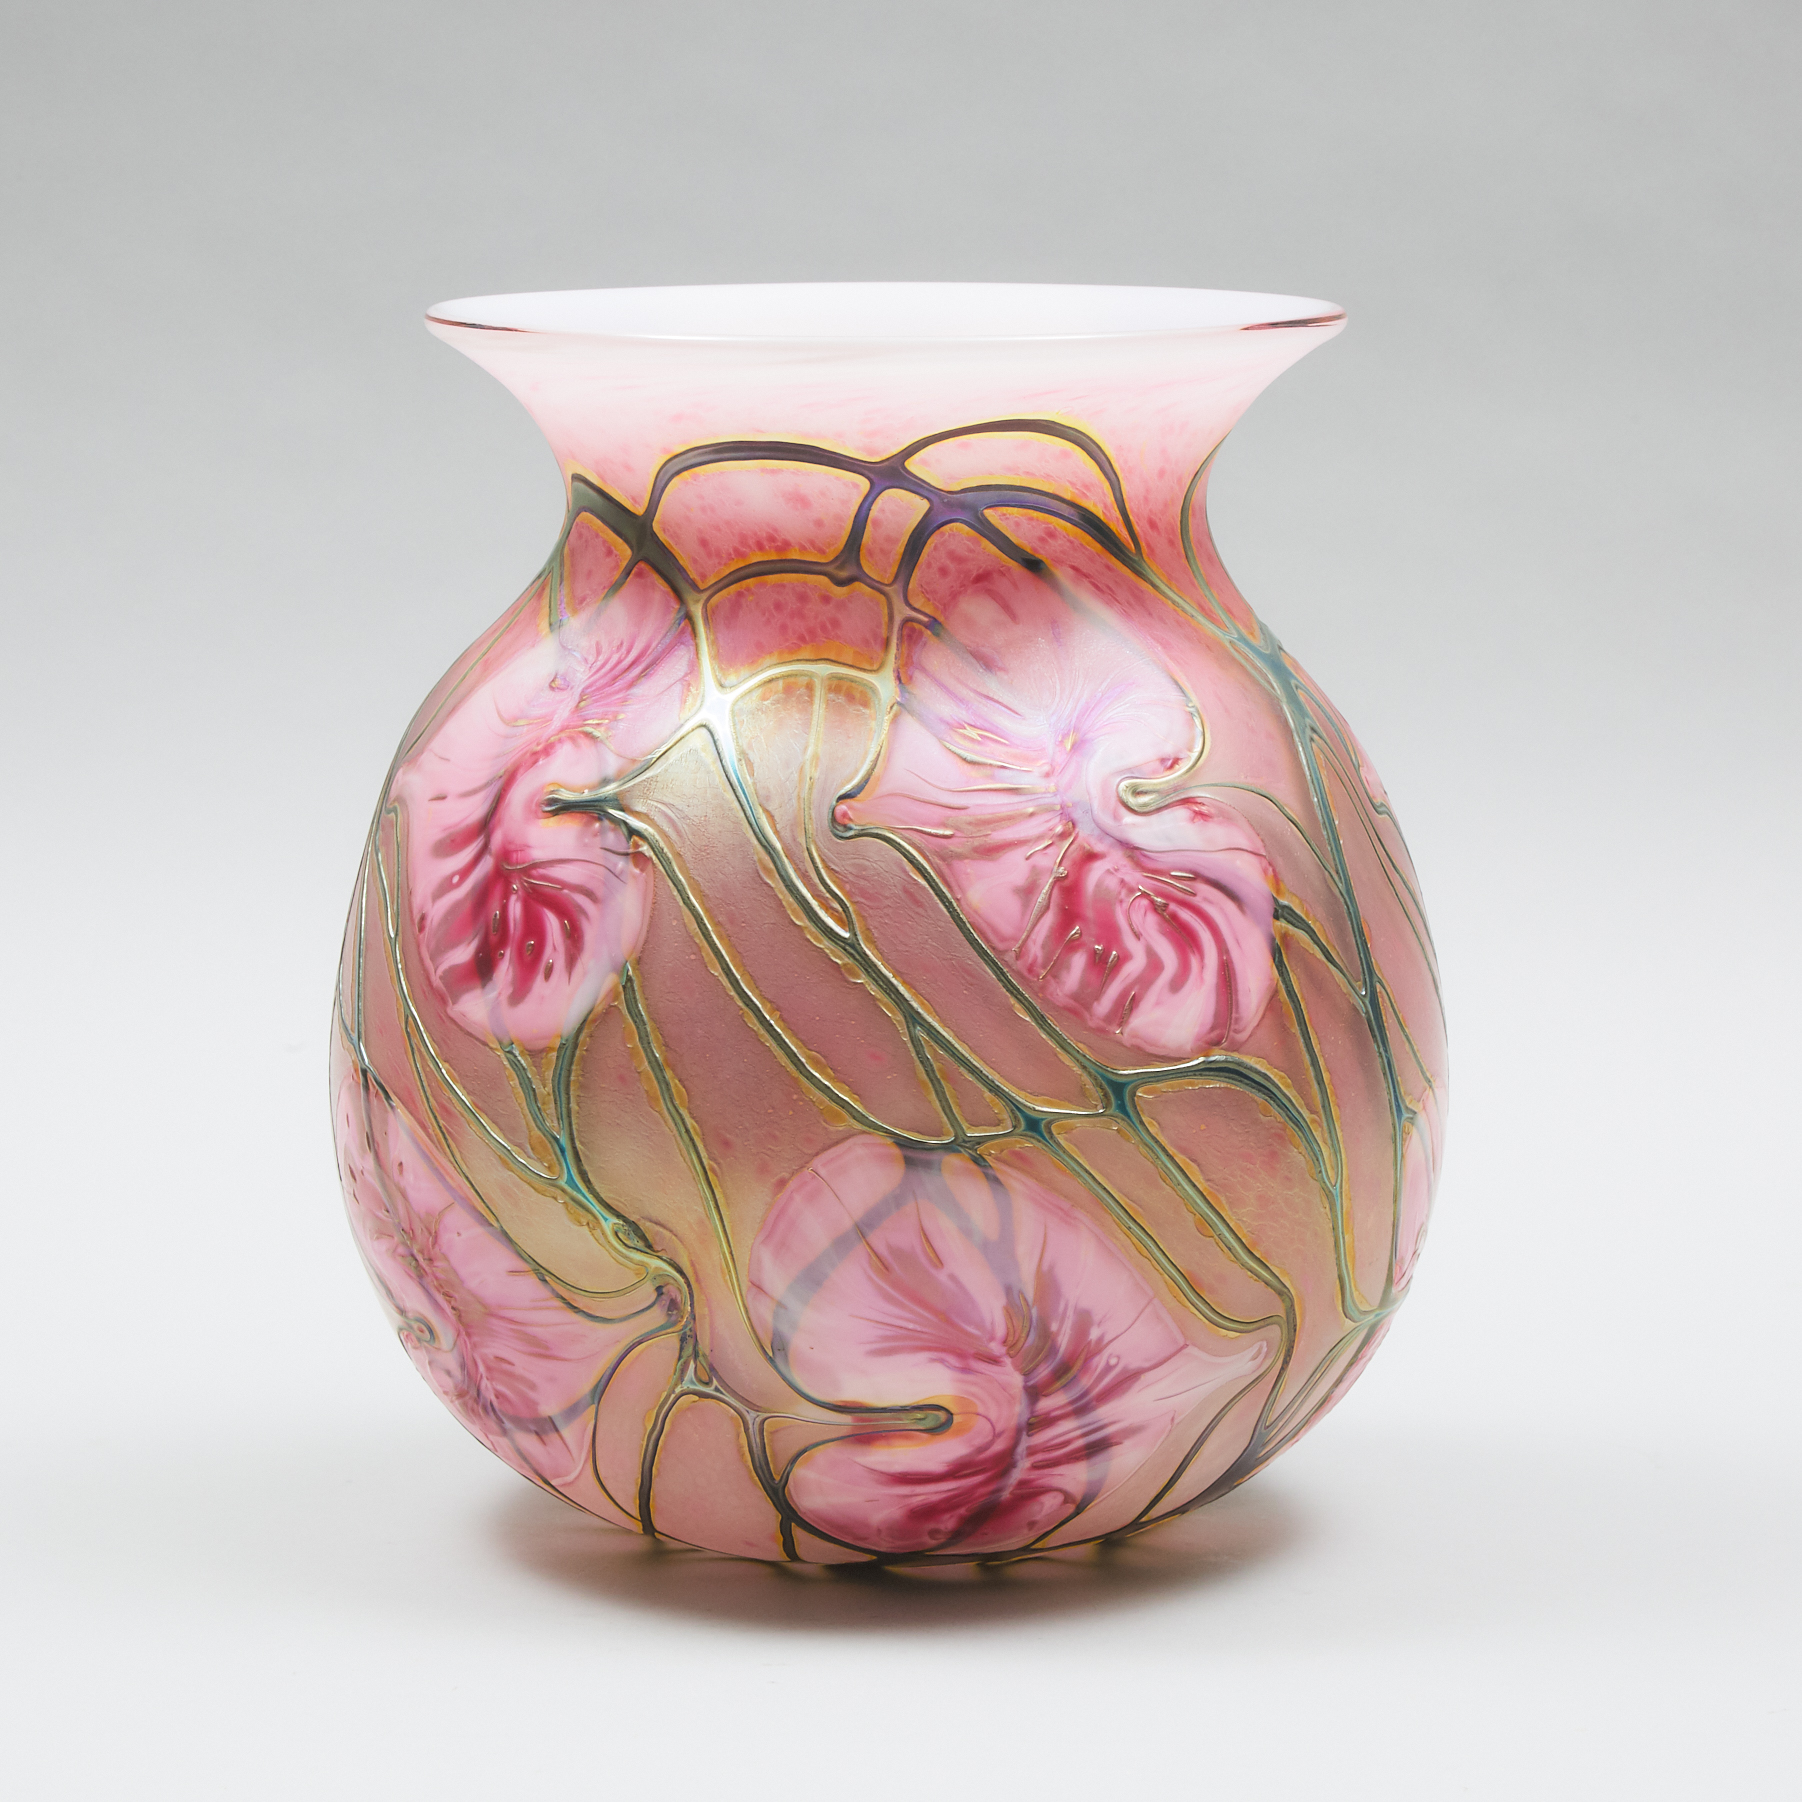 John Lotton (American, b.1964), Large Iridescent 'Vine and Leaf' Glass Vase, 1993